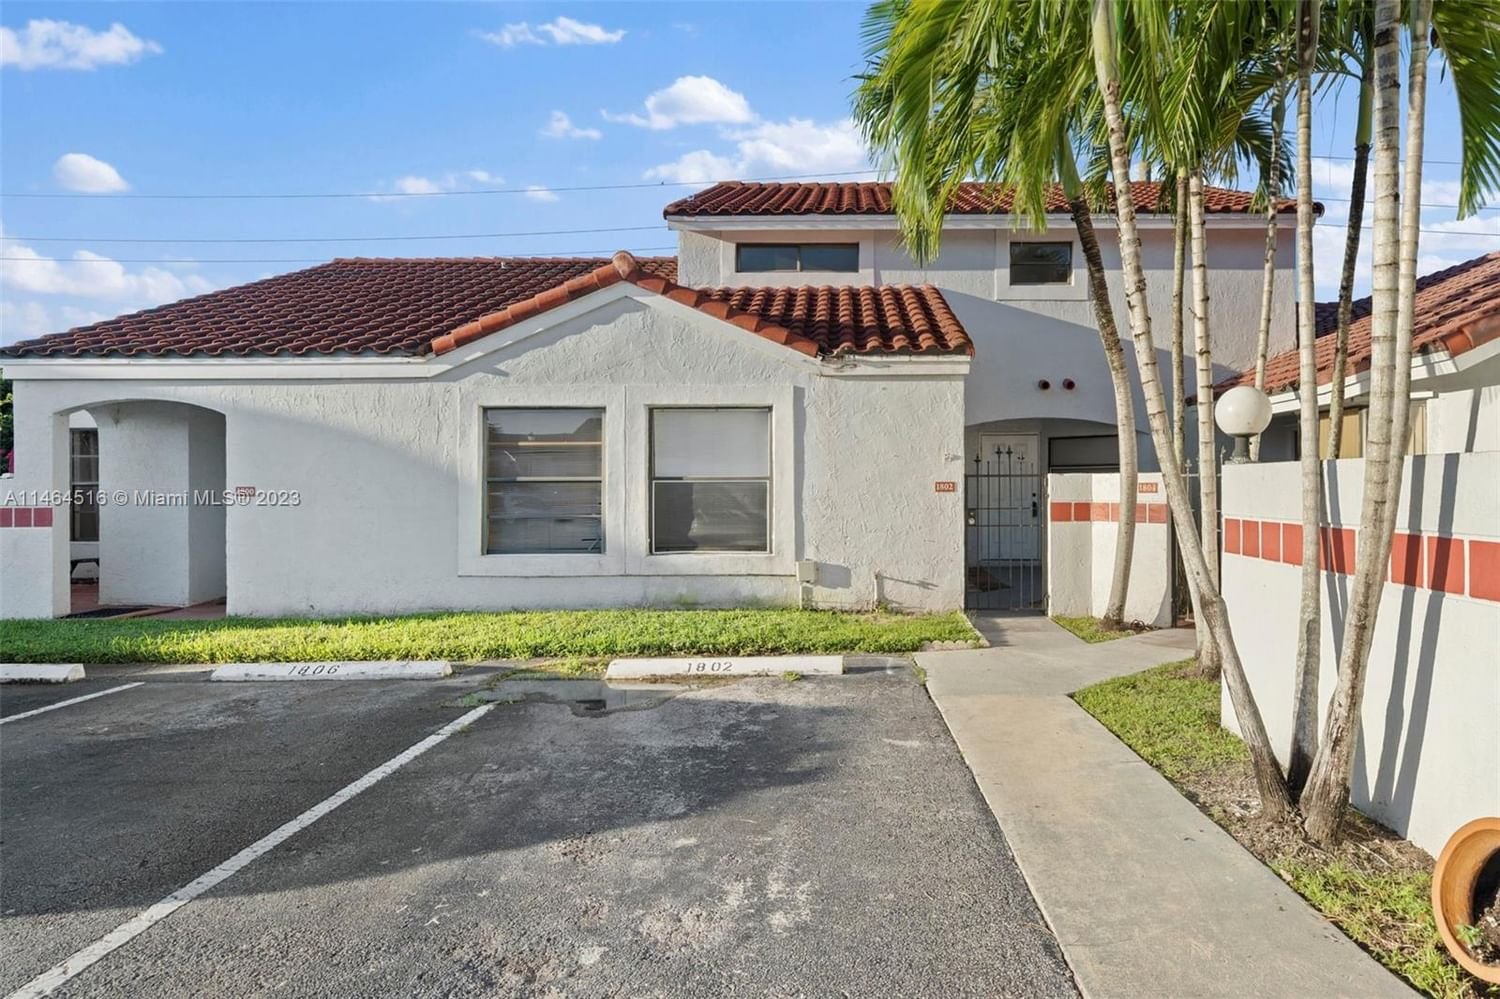 Real estate property located at 1802 San Remo Cir #0, Miami-Dade County, SAN REMO, Homestead, FL